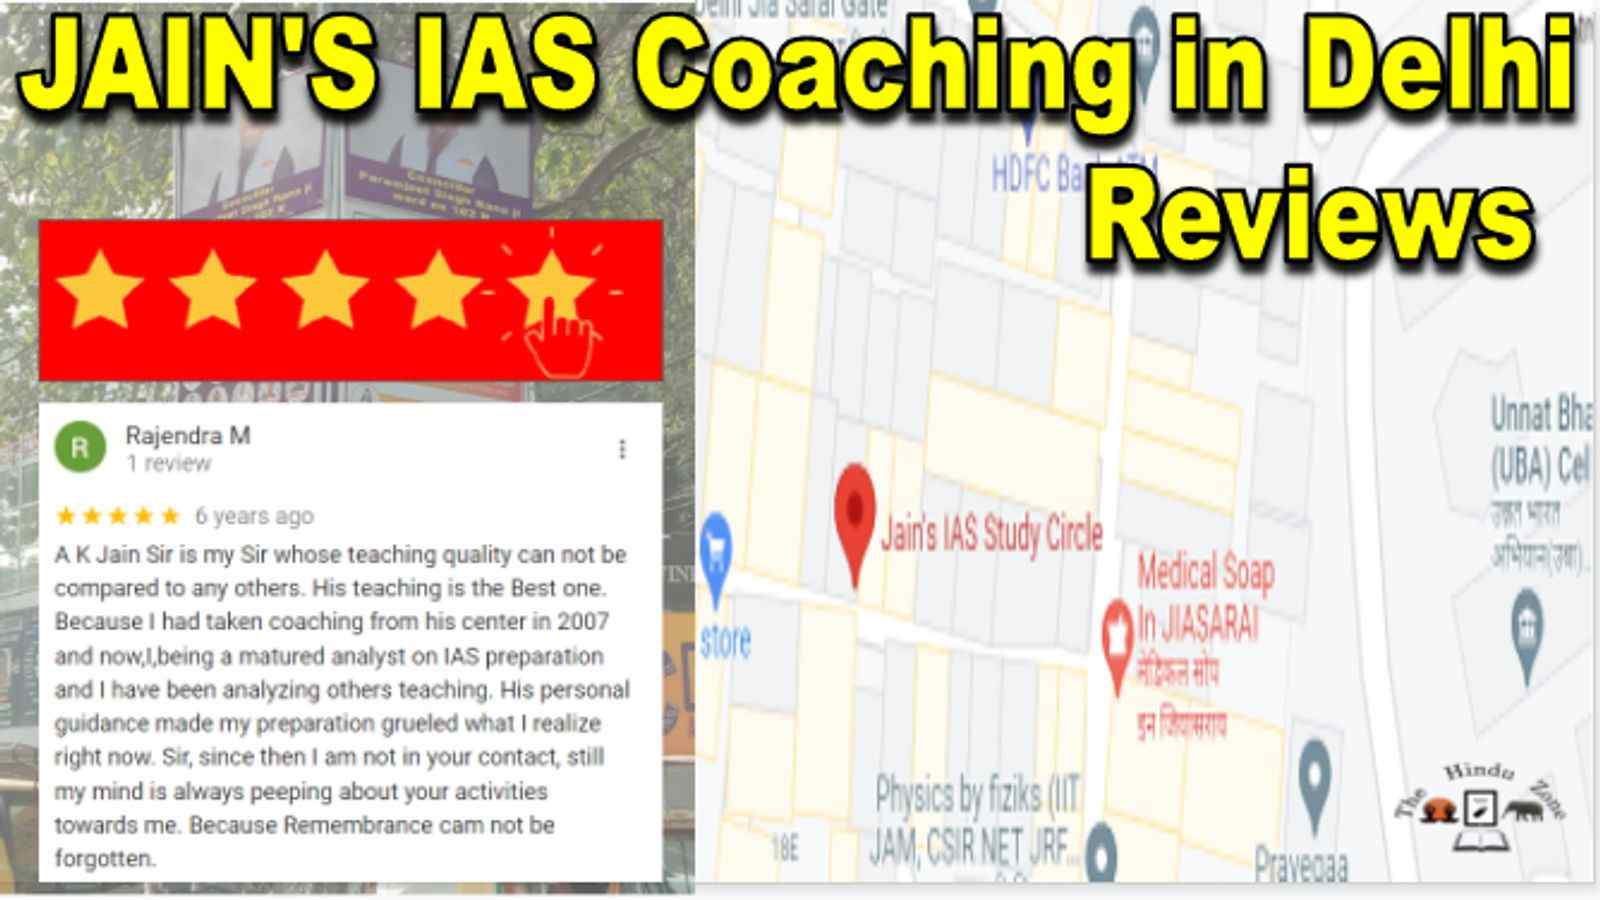 Jain's IAS Coaching in Delhi Reviews